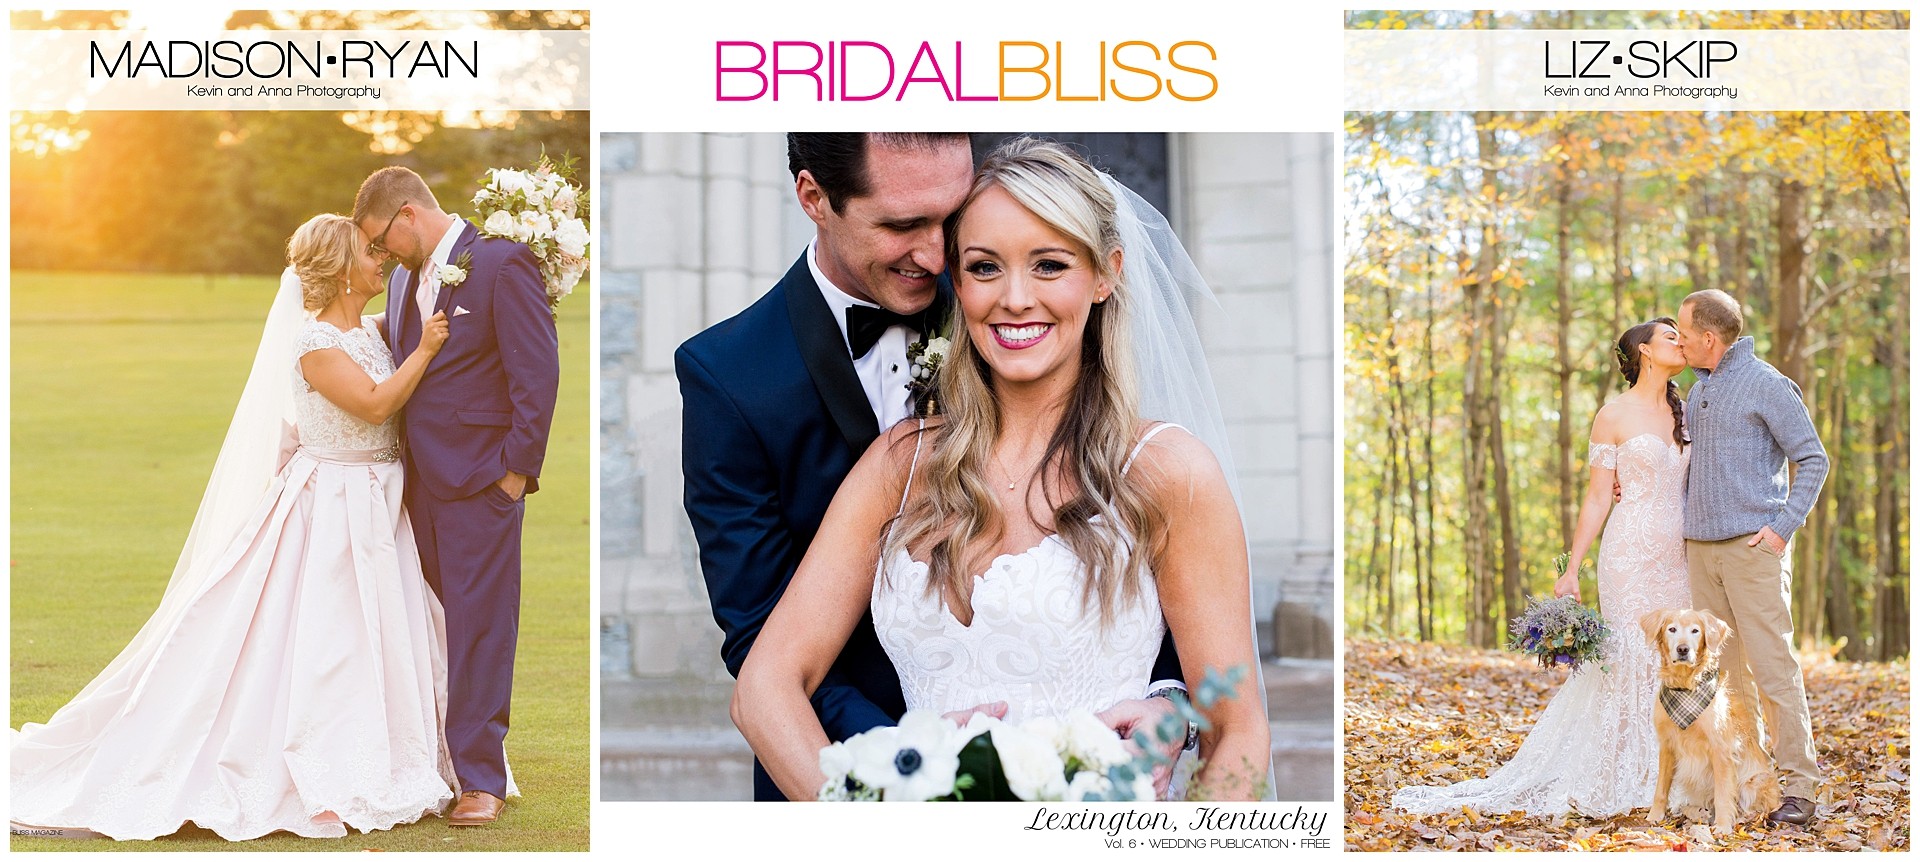 Kentucky Wedding Photographer in Lexington in Bridal Bliss Magazine